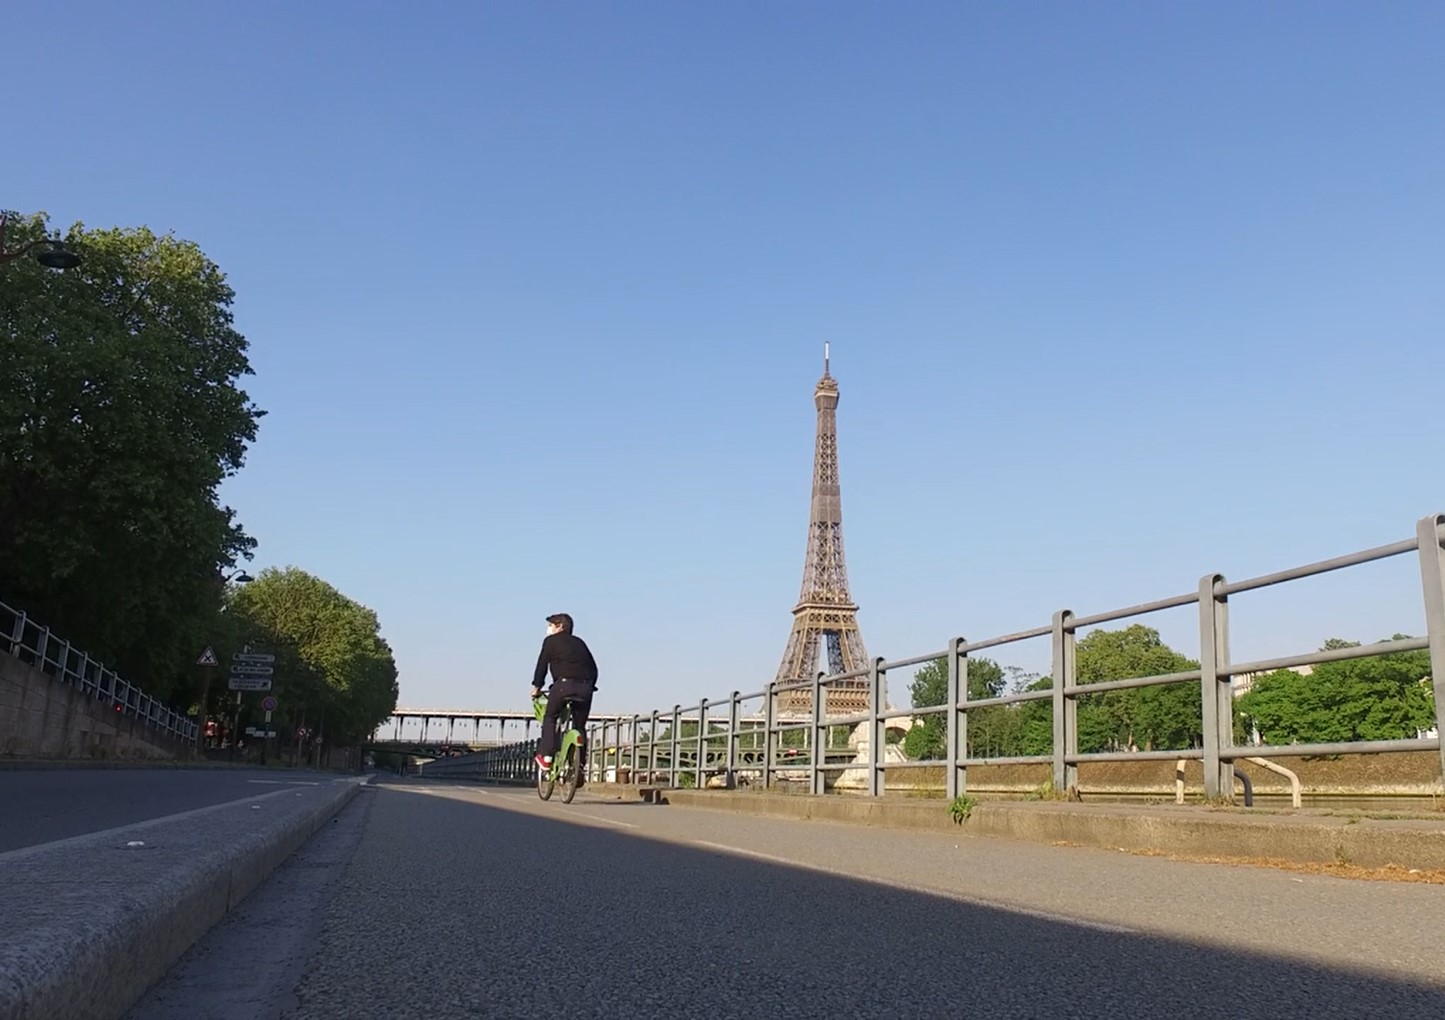 Paris created 1,094 kilometres of bike lanes, and pedestrianized the boulevards on the Seine